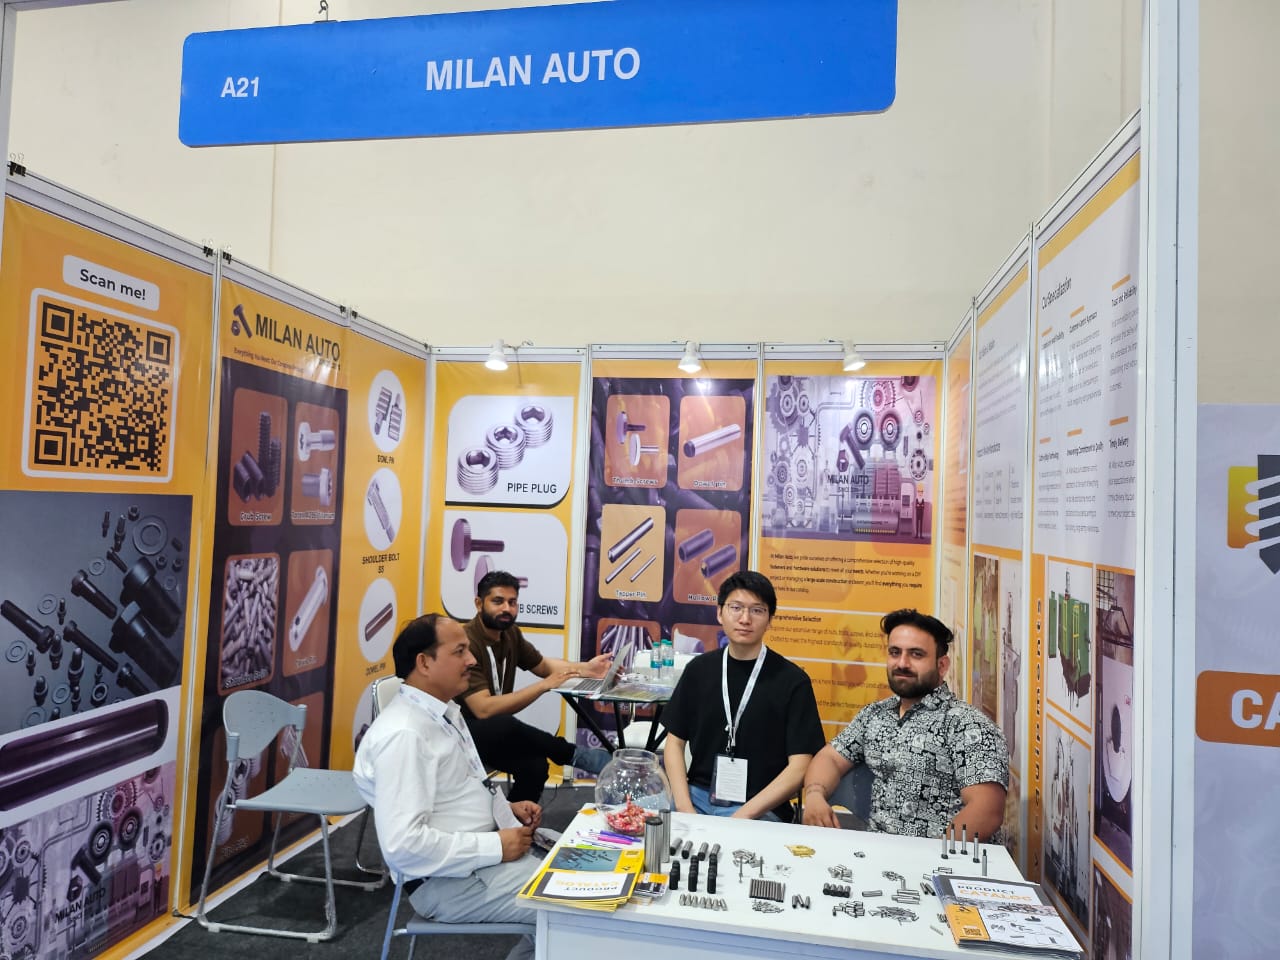 milan auto exhibition (1)